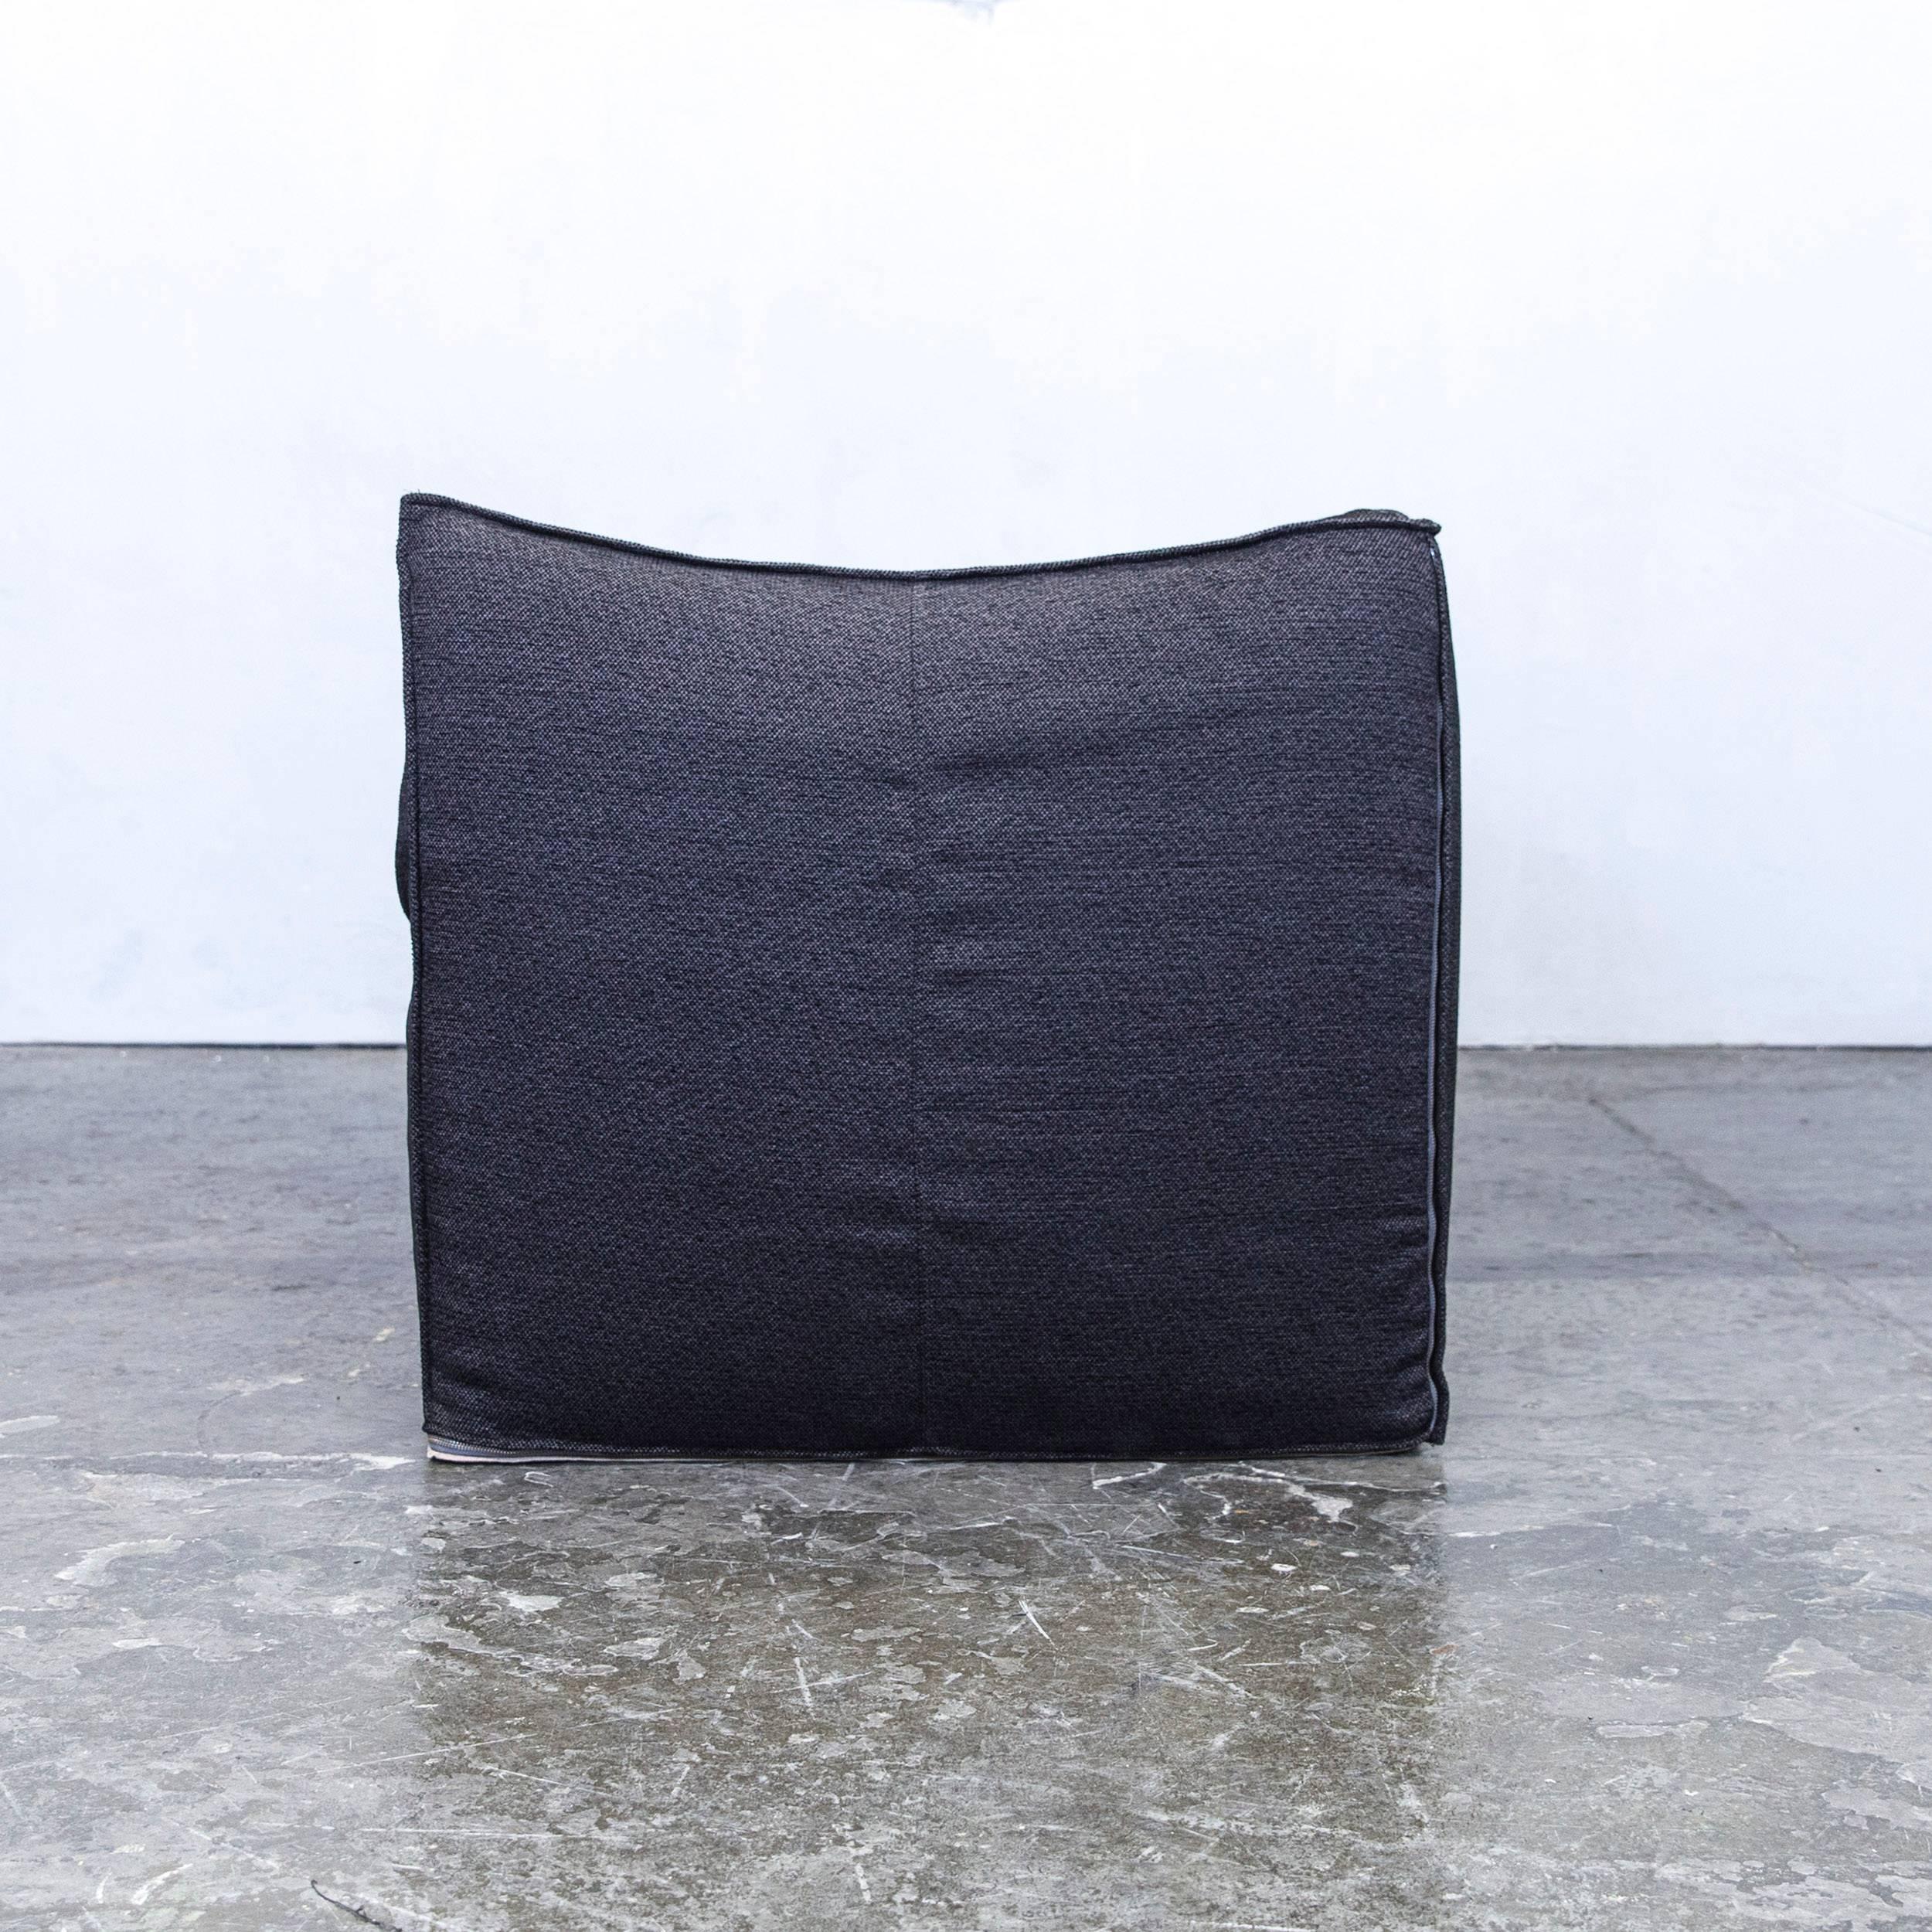 Leather B&B Italia Le Bambole Designer Sofa Fabric Grey Black Two-Seat Couch Modern